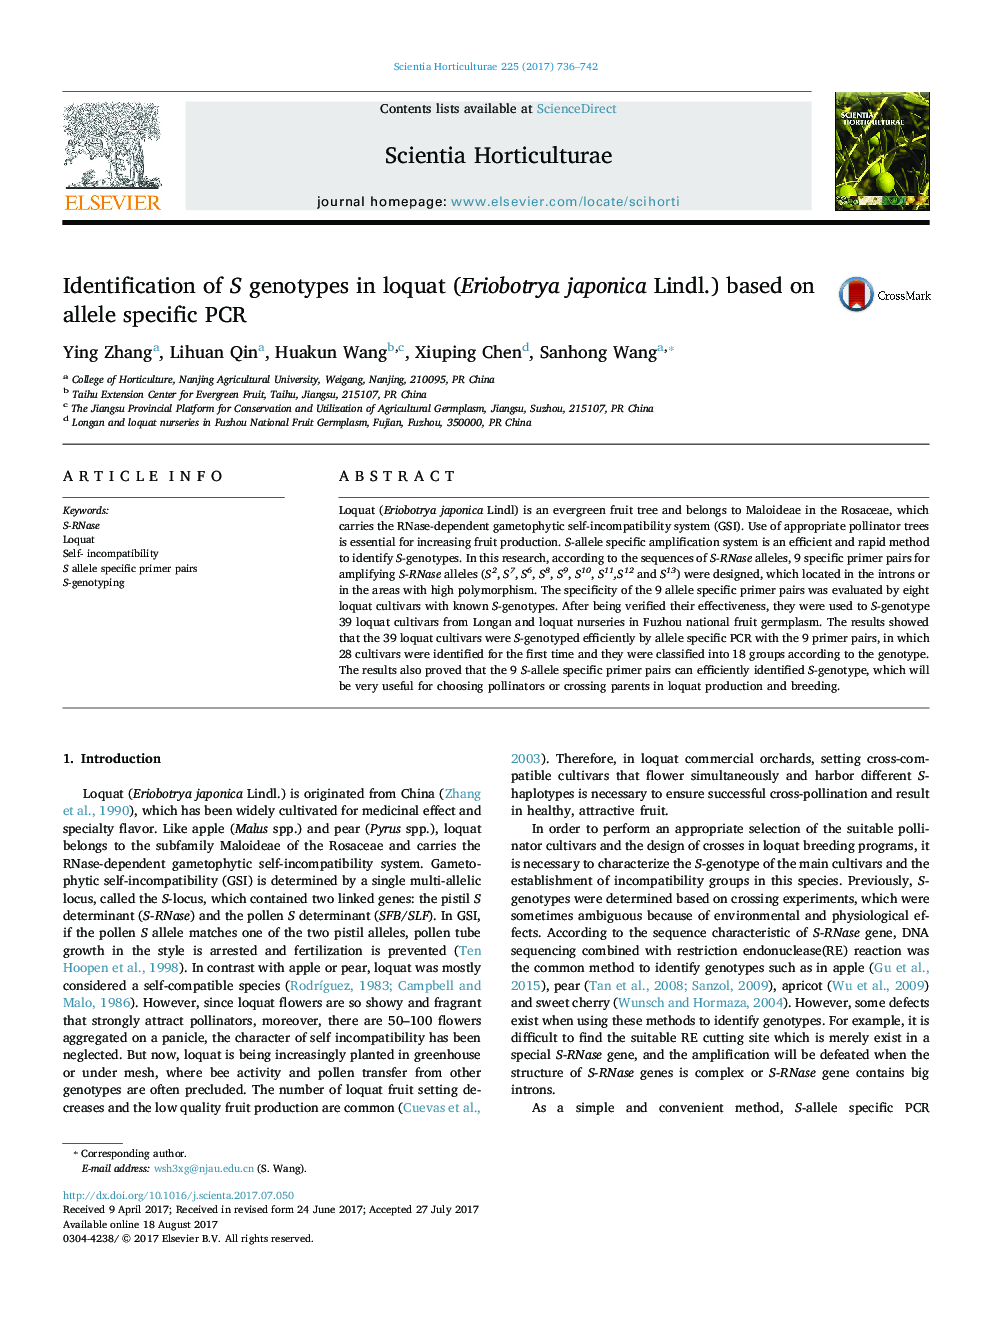 Identification of S genotypes in loquat (Eriobotrya japonica Lindl.) based on allele specific PCR